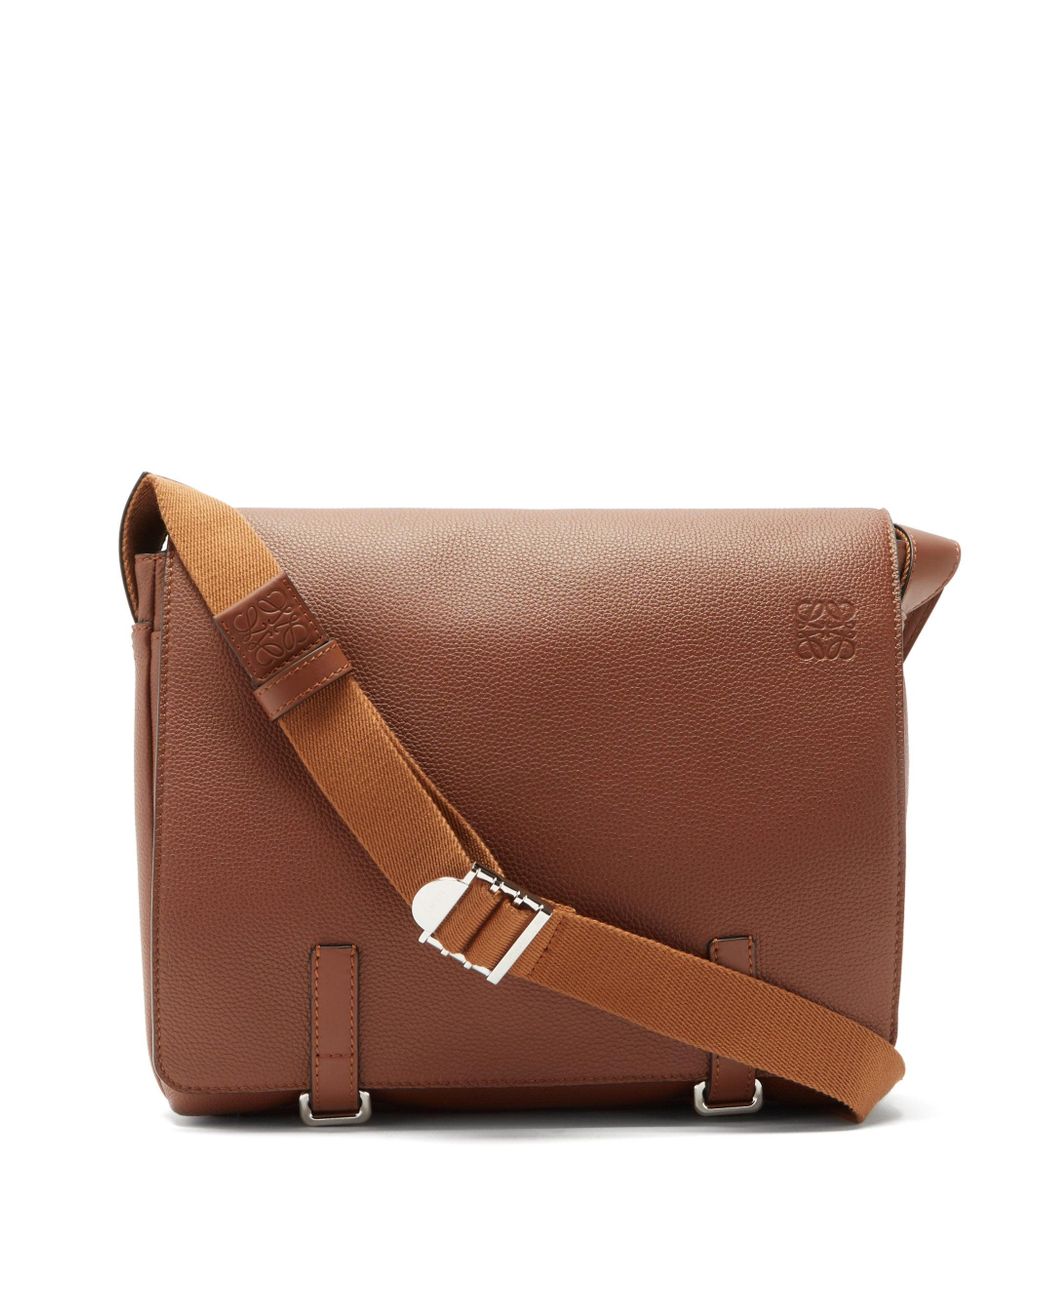 Loewe Military Leather Messenger Bag in Tan (Brown) for Men - Lyst